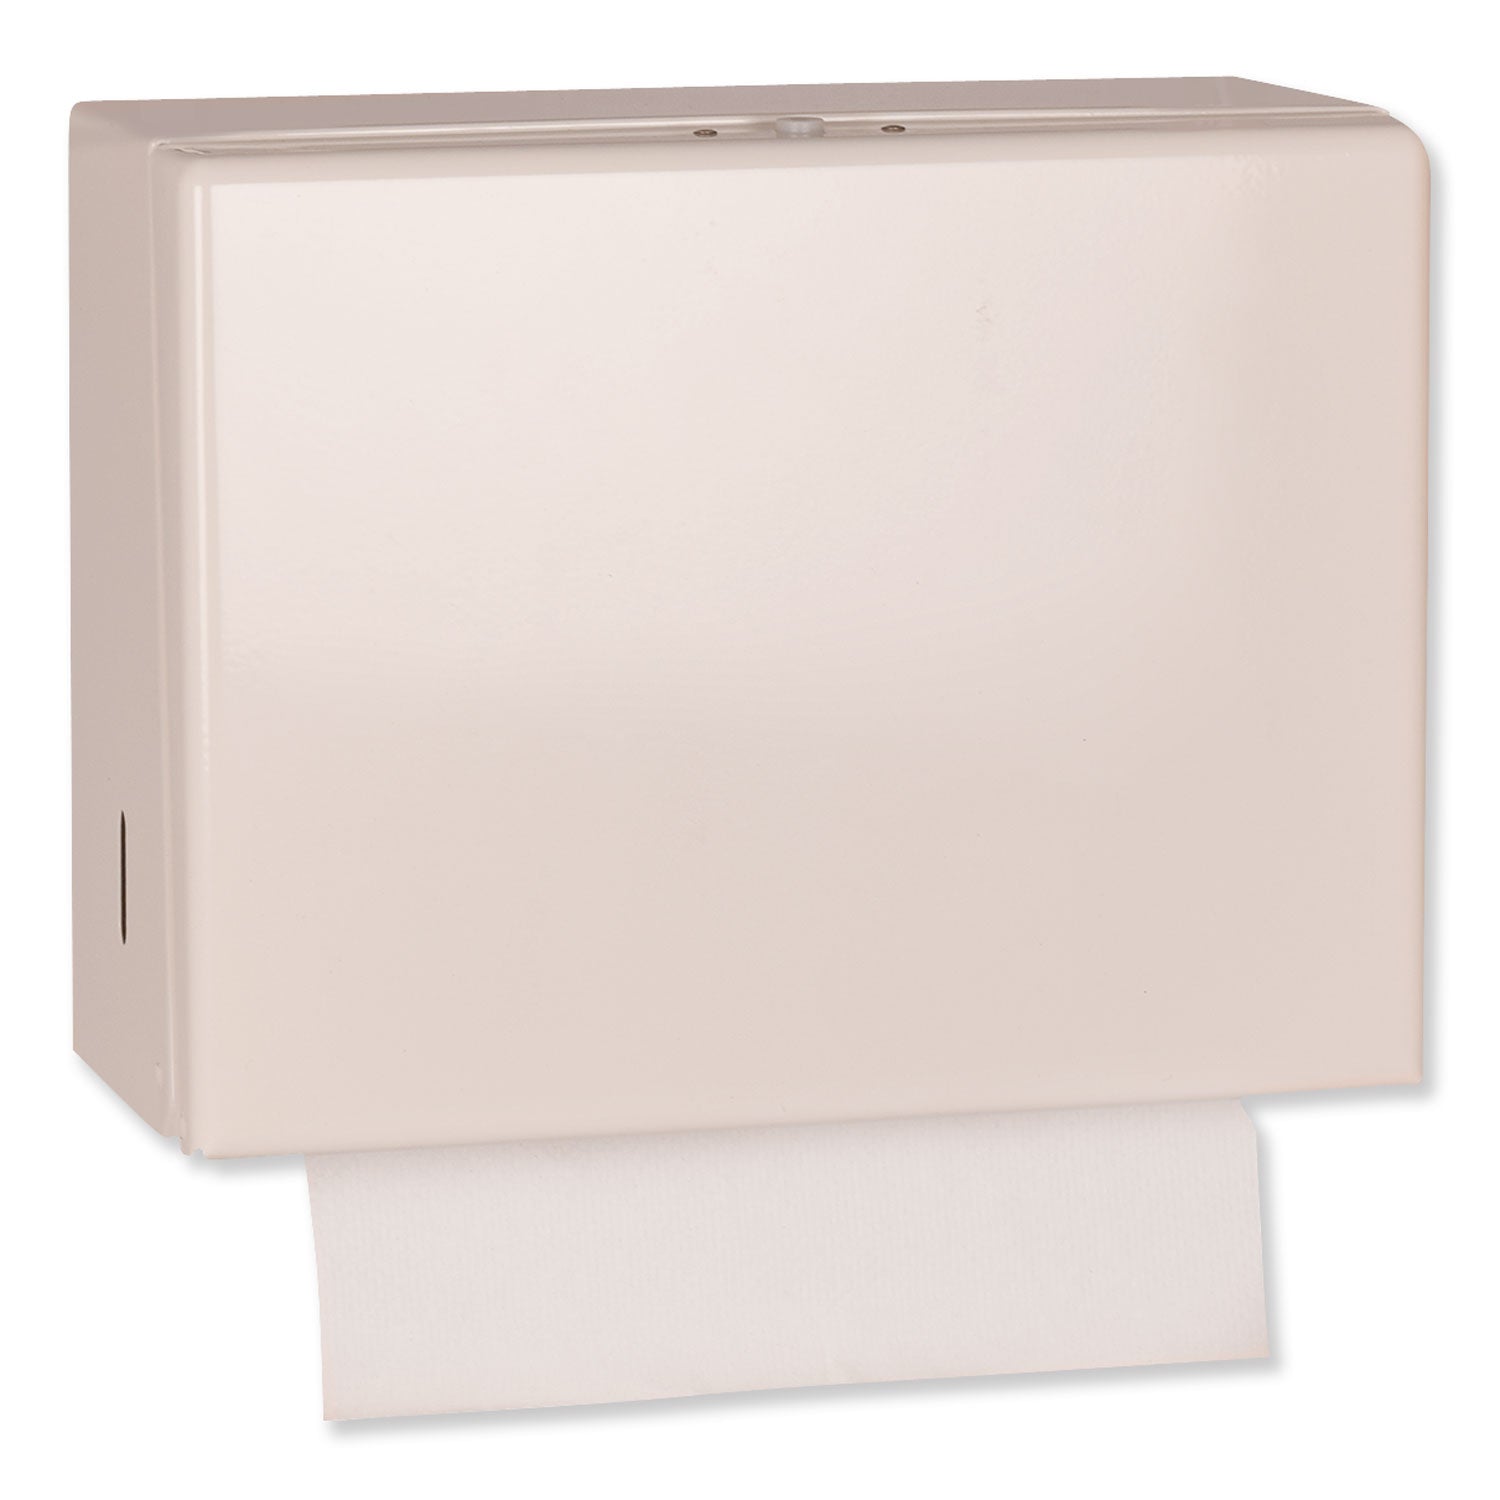 singlefold-hand-towel-dispenser-1175-x-575-x-925-white_trk70wm1 - 7